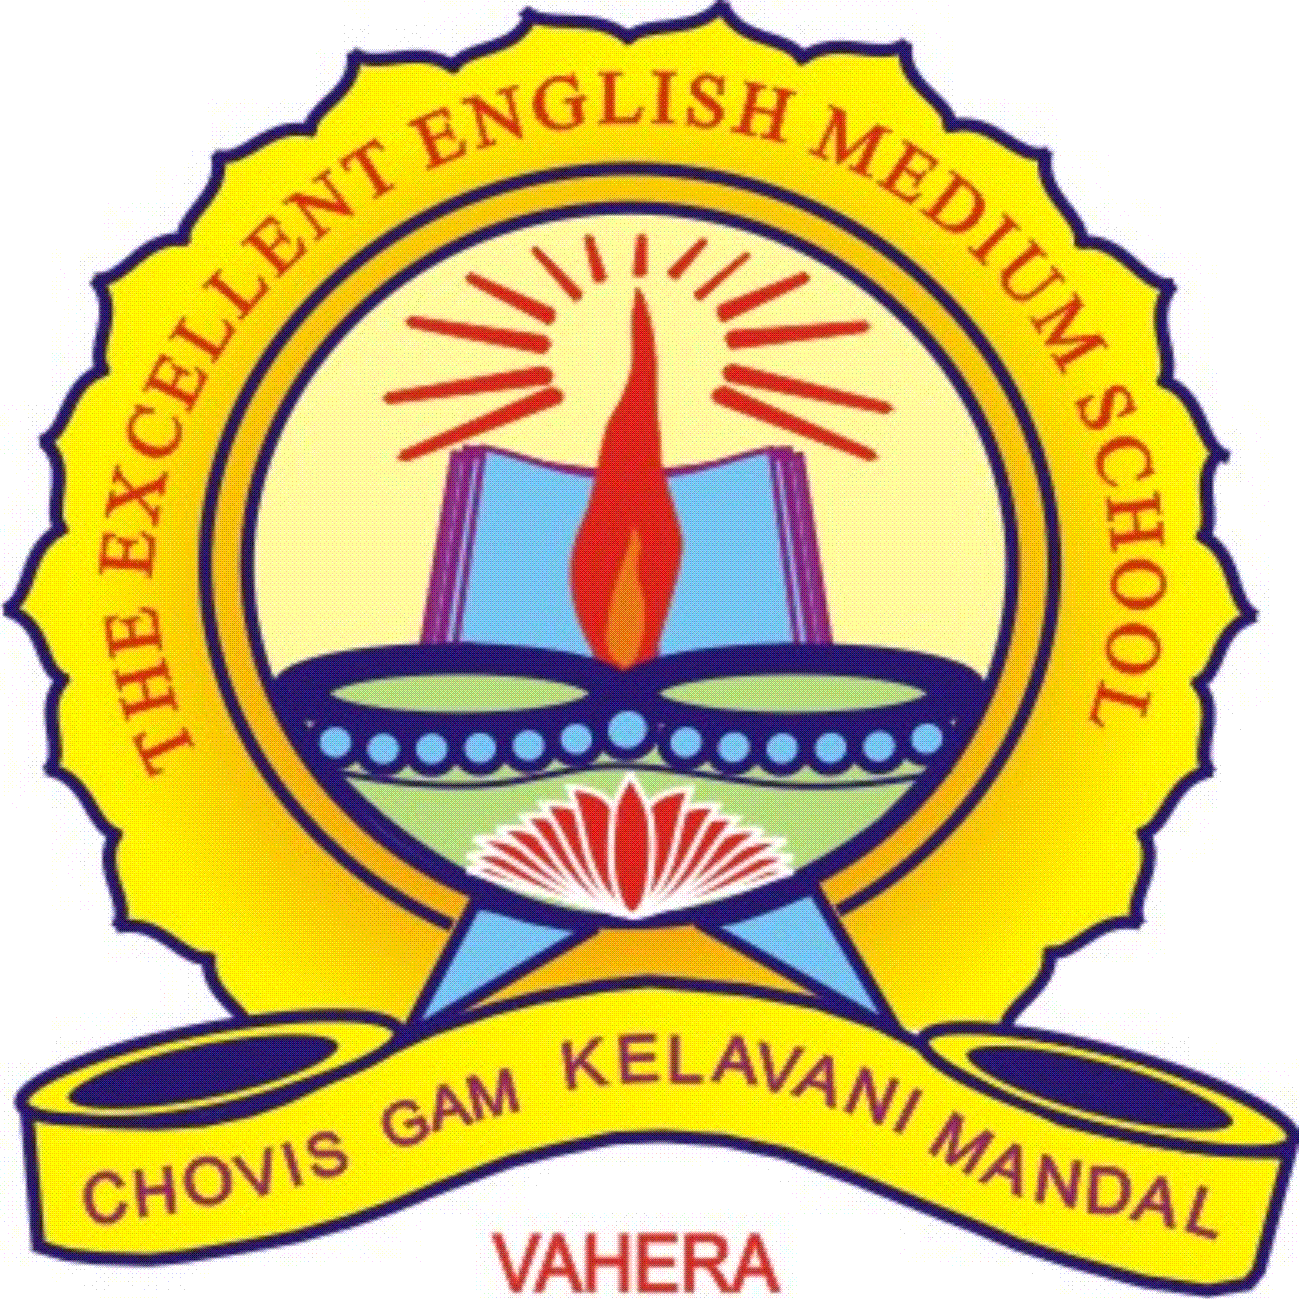 The Excellent English Medium School Logo